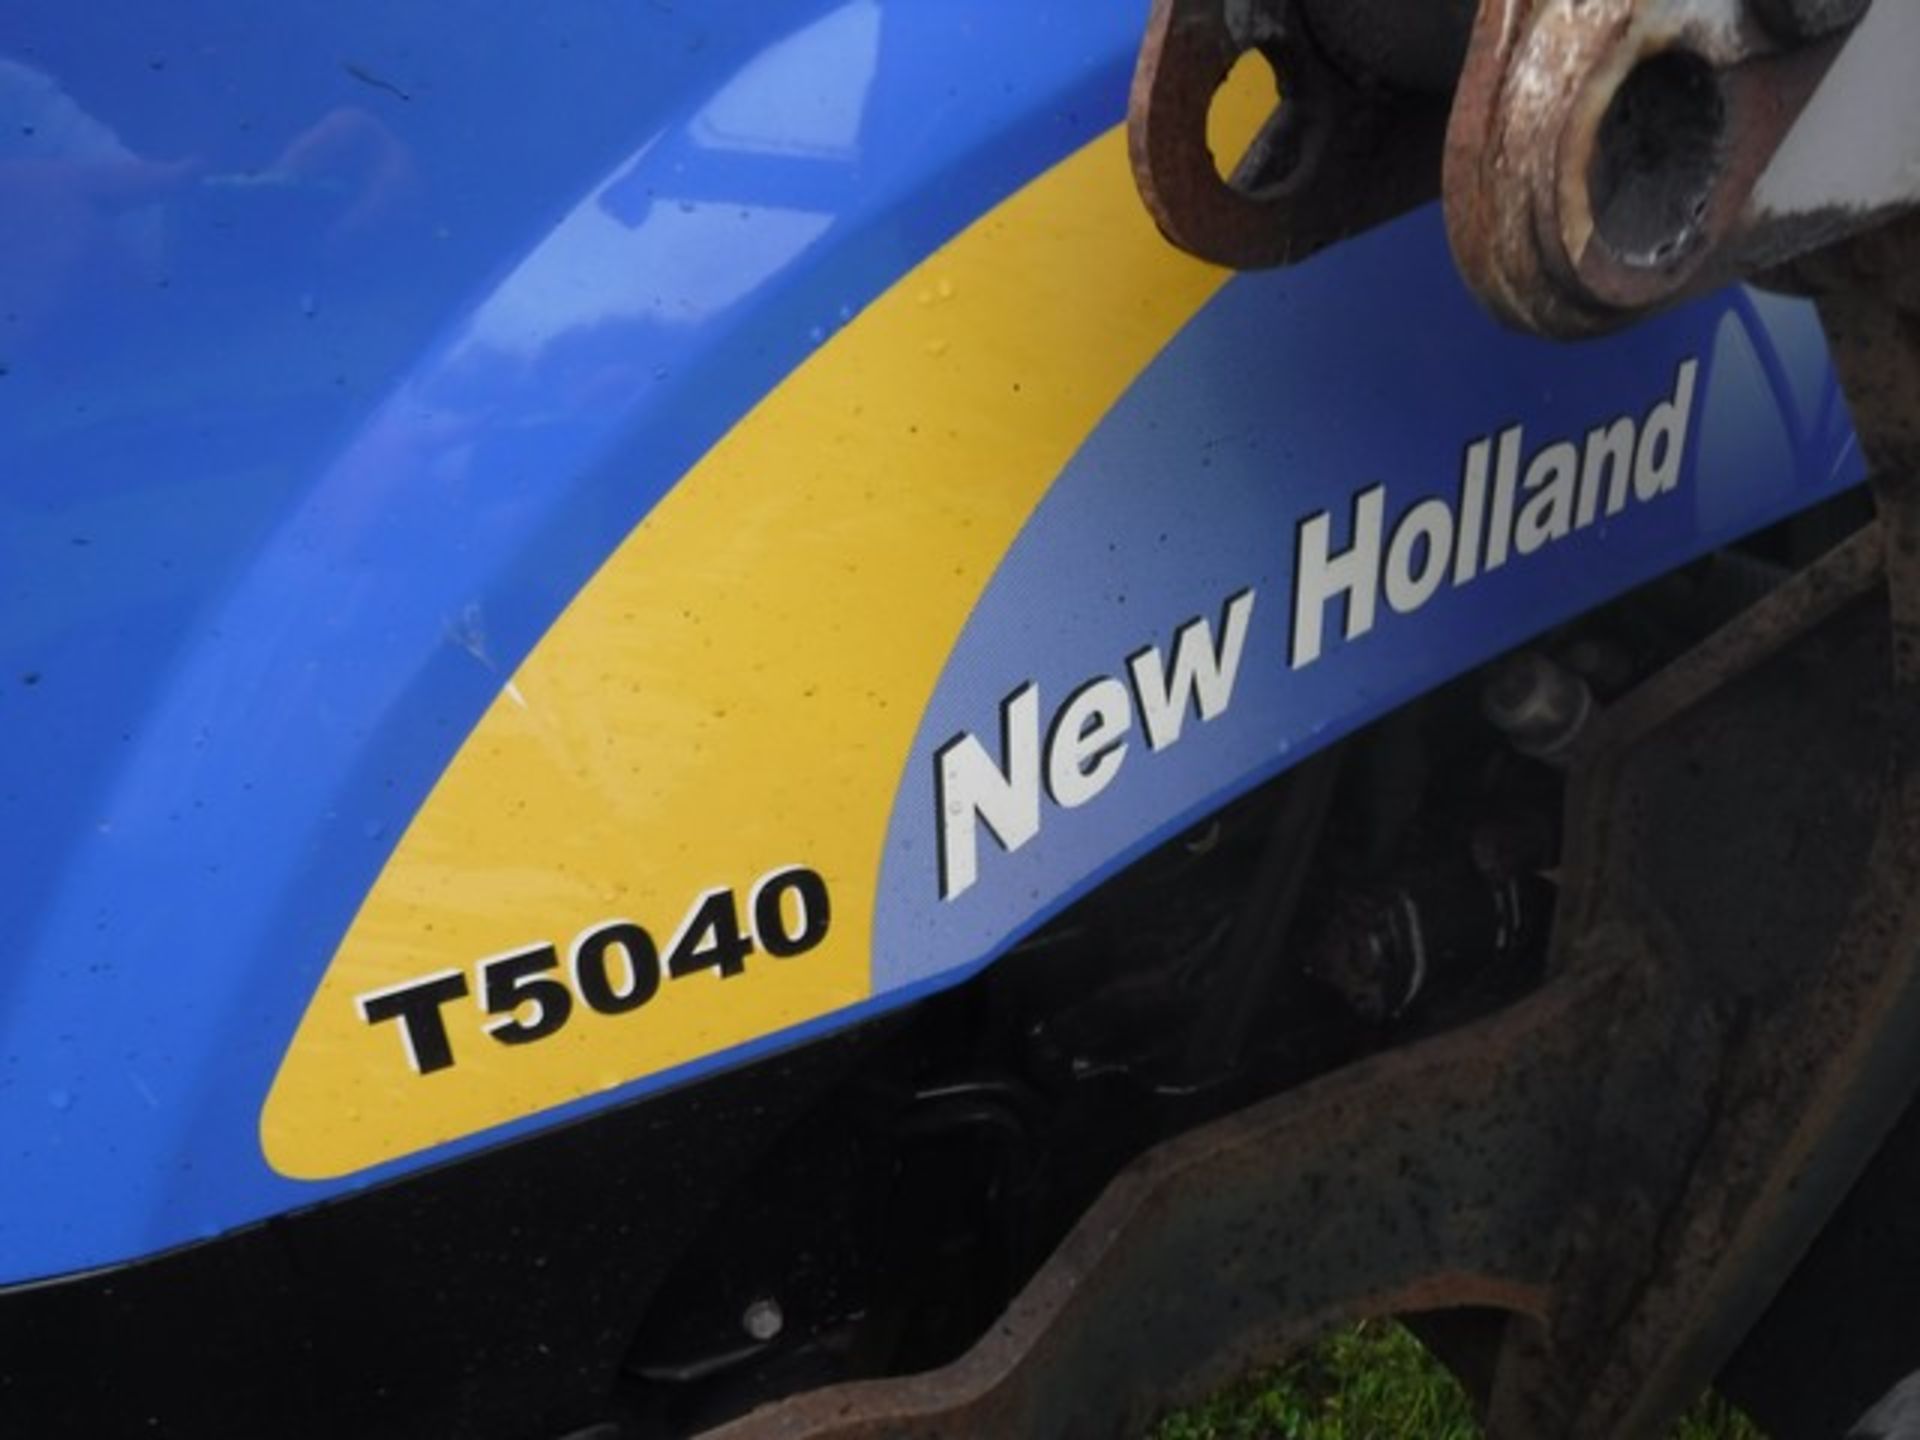 2010 NEW HOLLAND T5040, REG SP10 BWL, S/N ZAJH02342, 7230HRS (NOT VERIFIED) C/W GRASS TYRES & MXT6S - Image 10 of 19